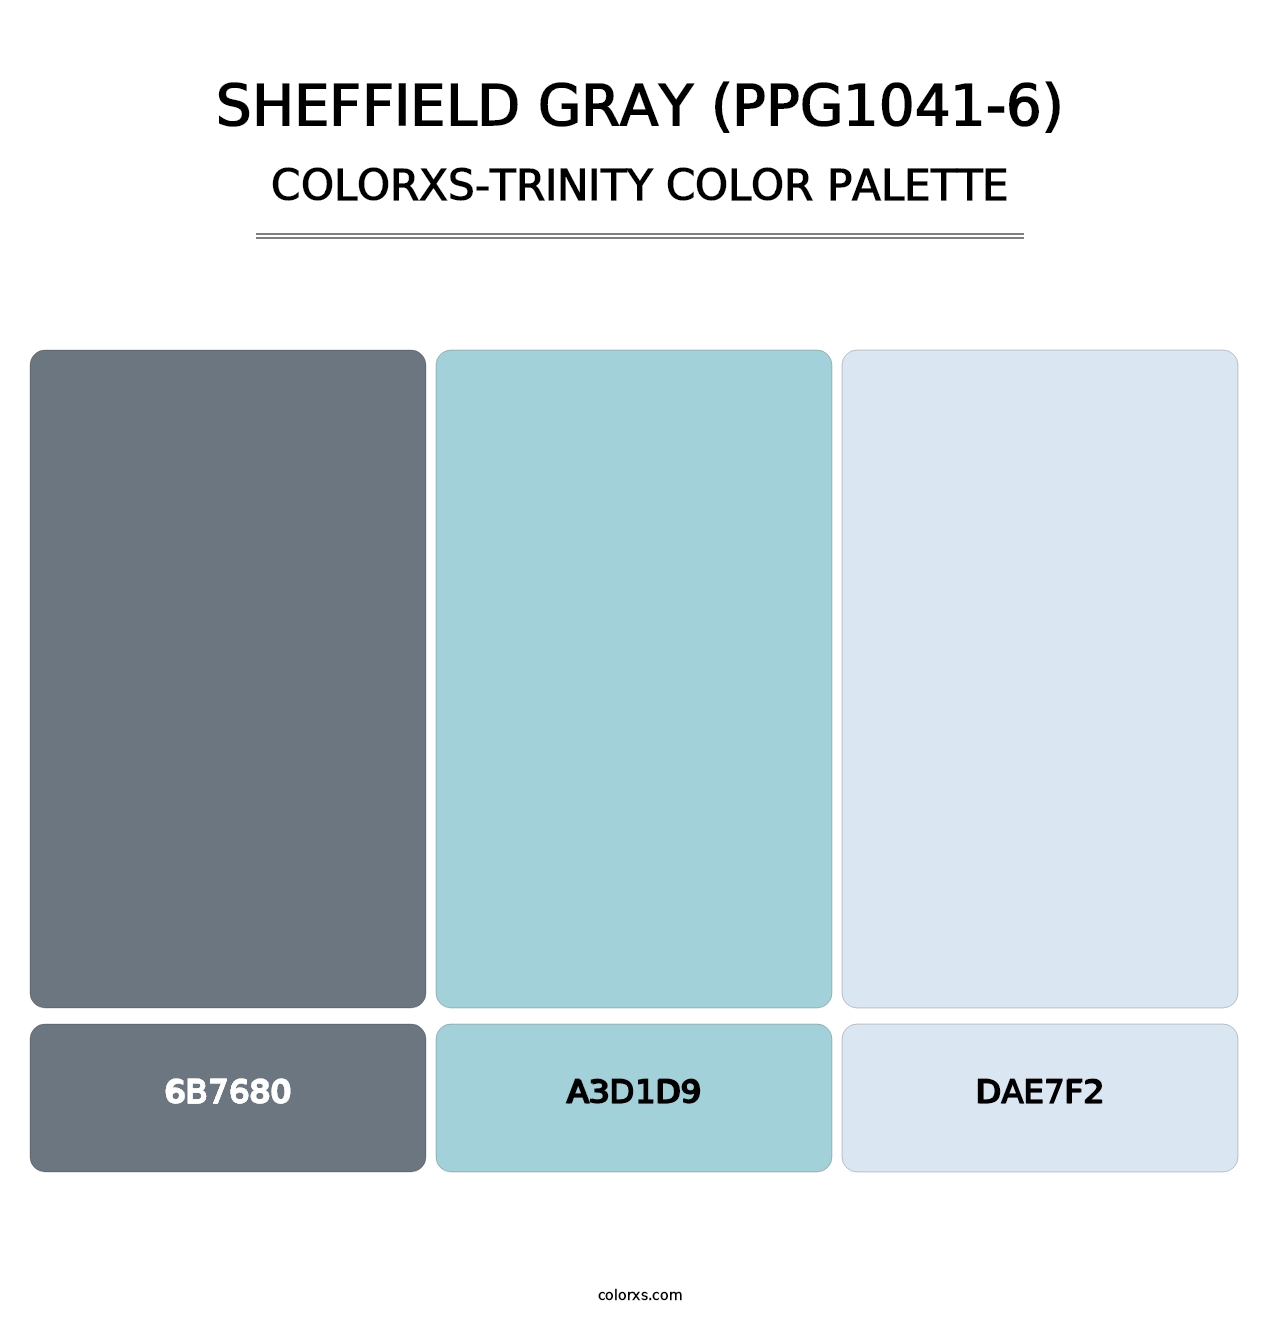 Sheffield Gray (PPG1041-6) - Colorxs Trinity Palette